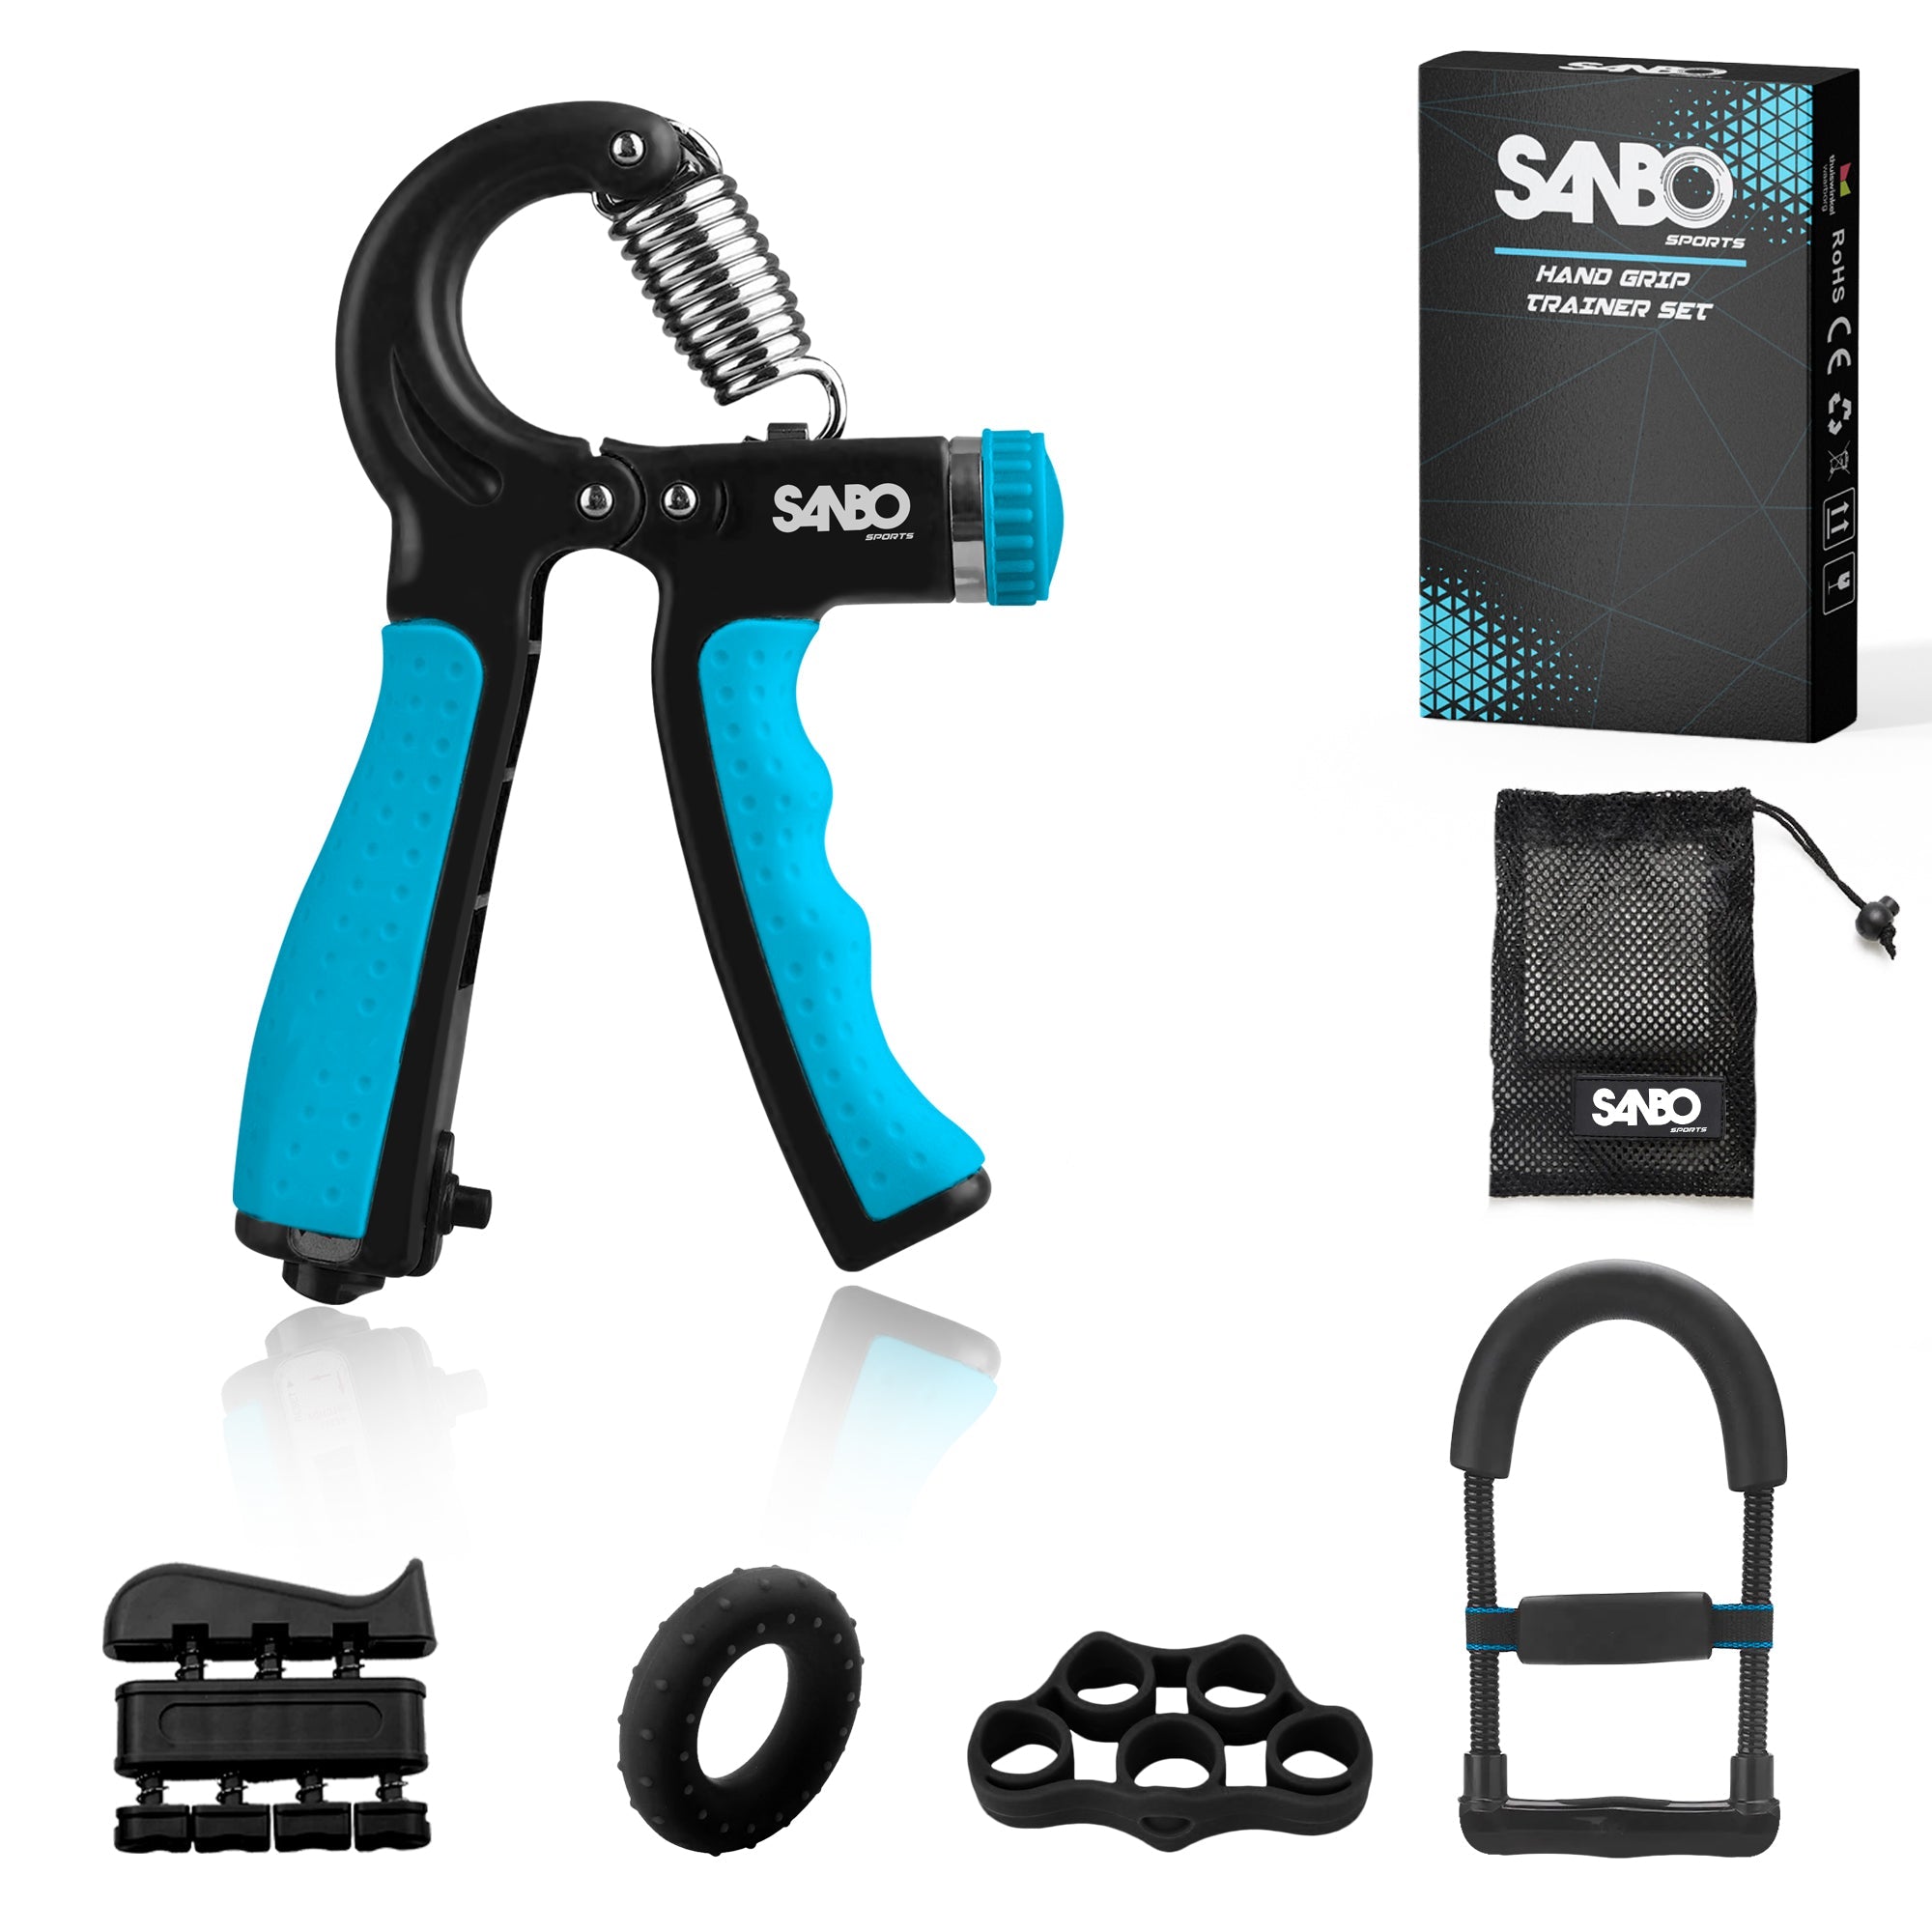 Sanbo Handtrainer Set - Incl. Onderarm Trainer - SANBO Sports